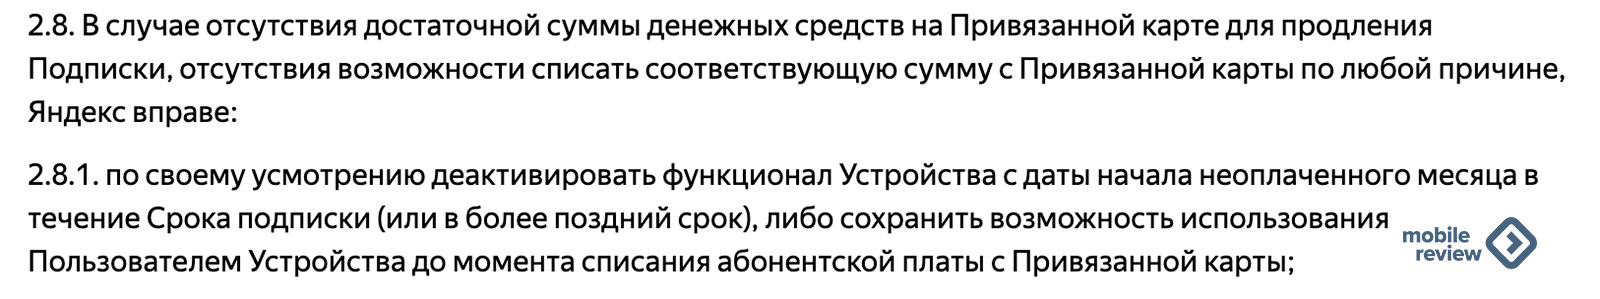 «Яндекс.Станция» по подписке — мошенничество и убытки «Яндекса». Пишите в полицию!